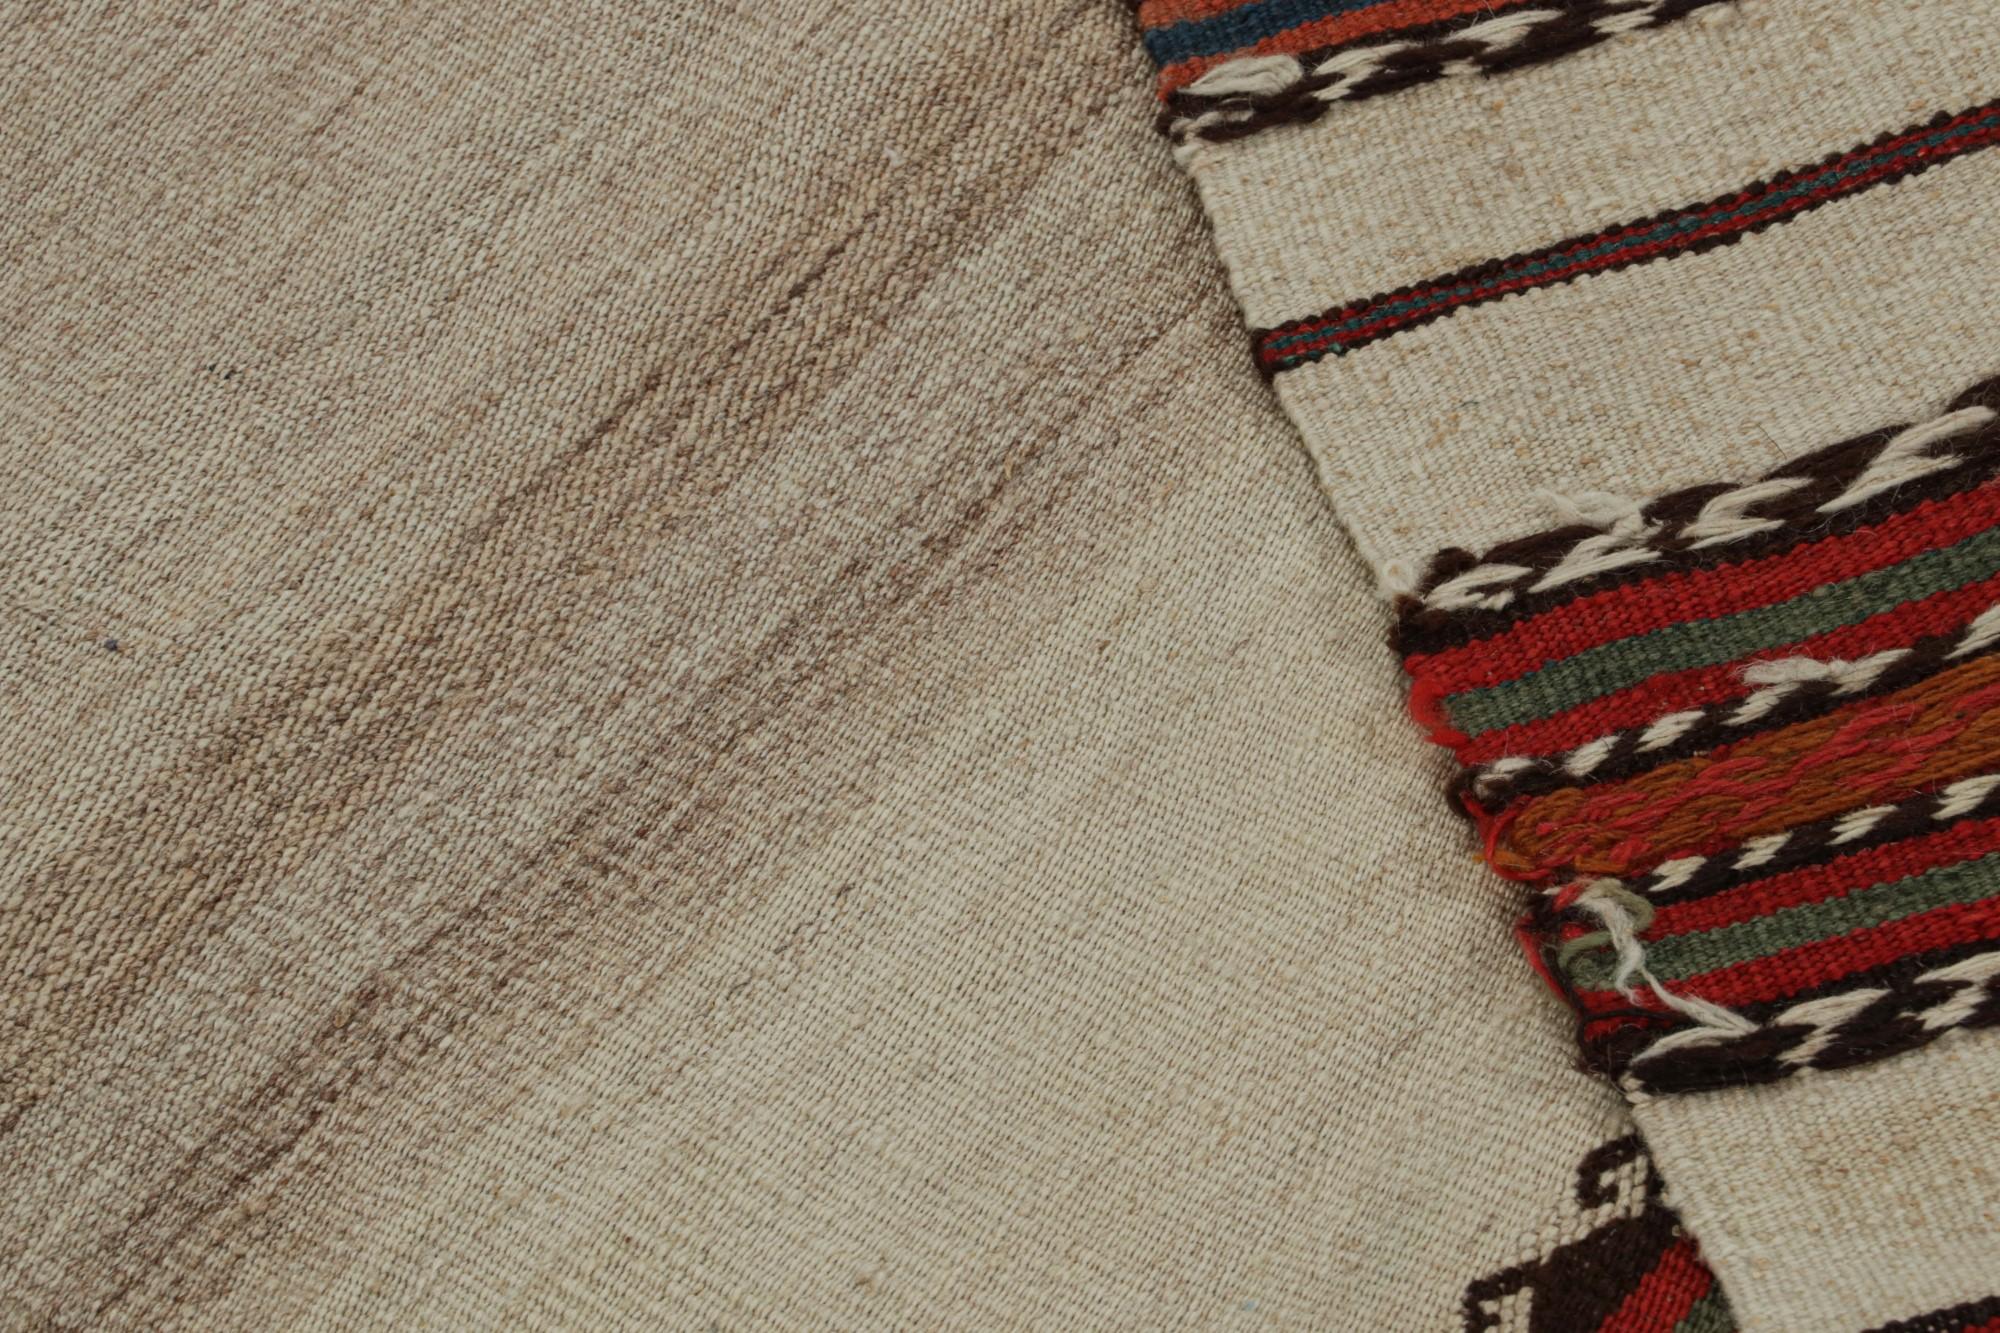 Vintage Afghan Tribal Kilim Runner Rug in Beige, with Stripes, from Rug & Kilim  For Sale 1